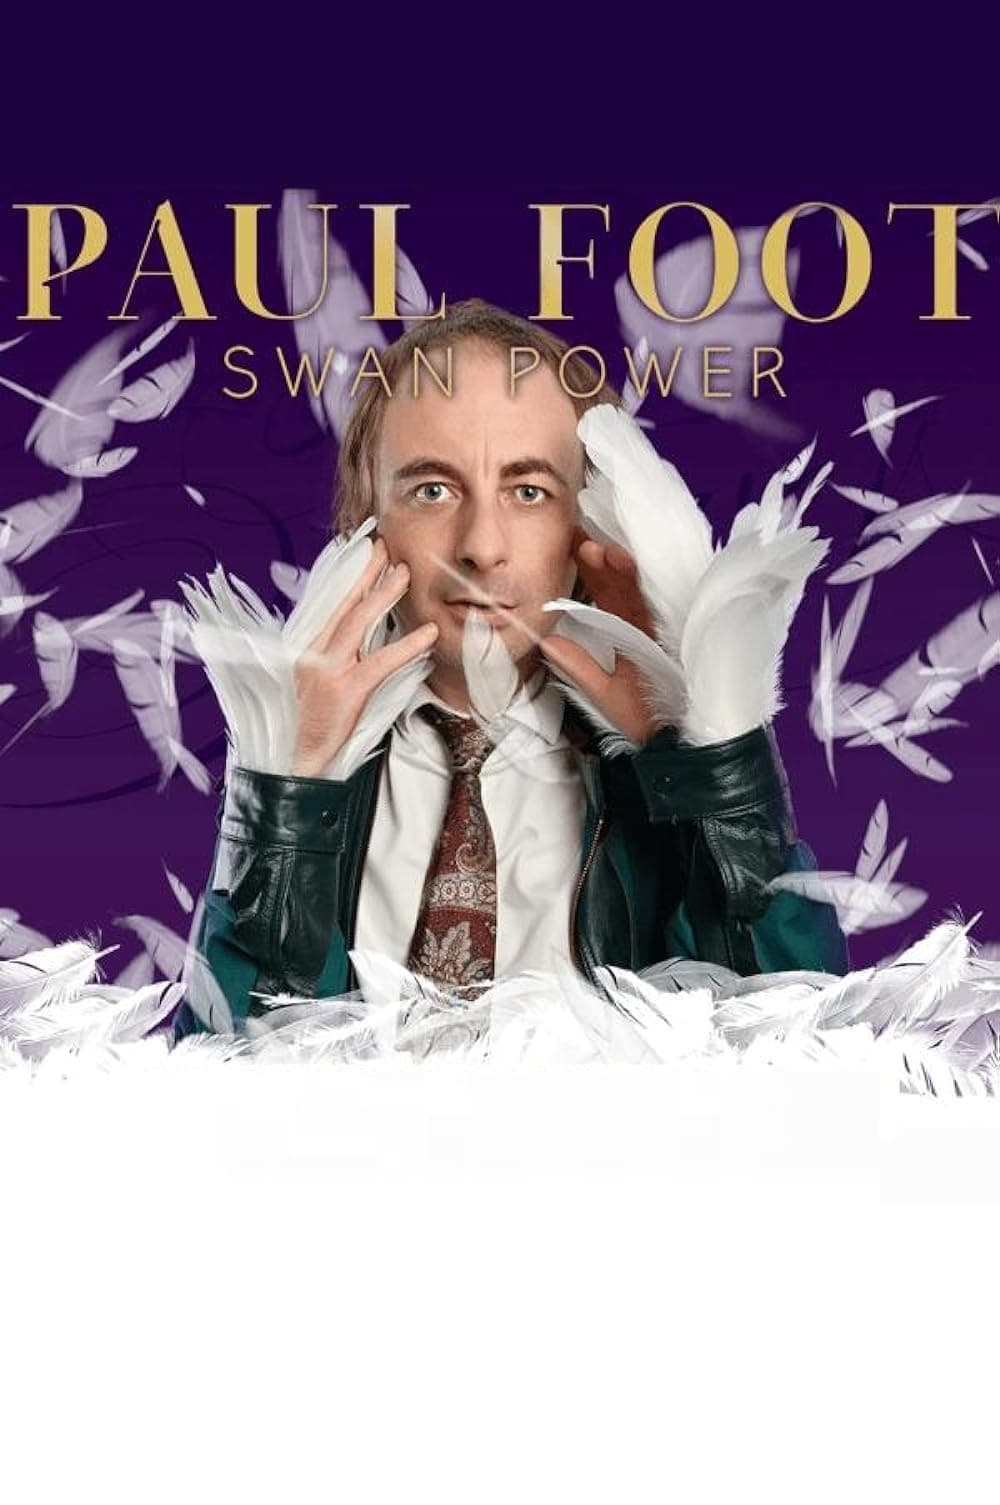 Paul Foot: Swan Power